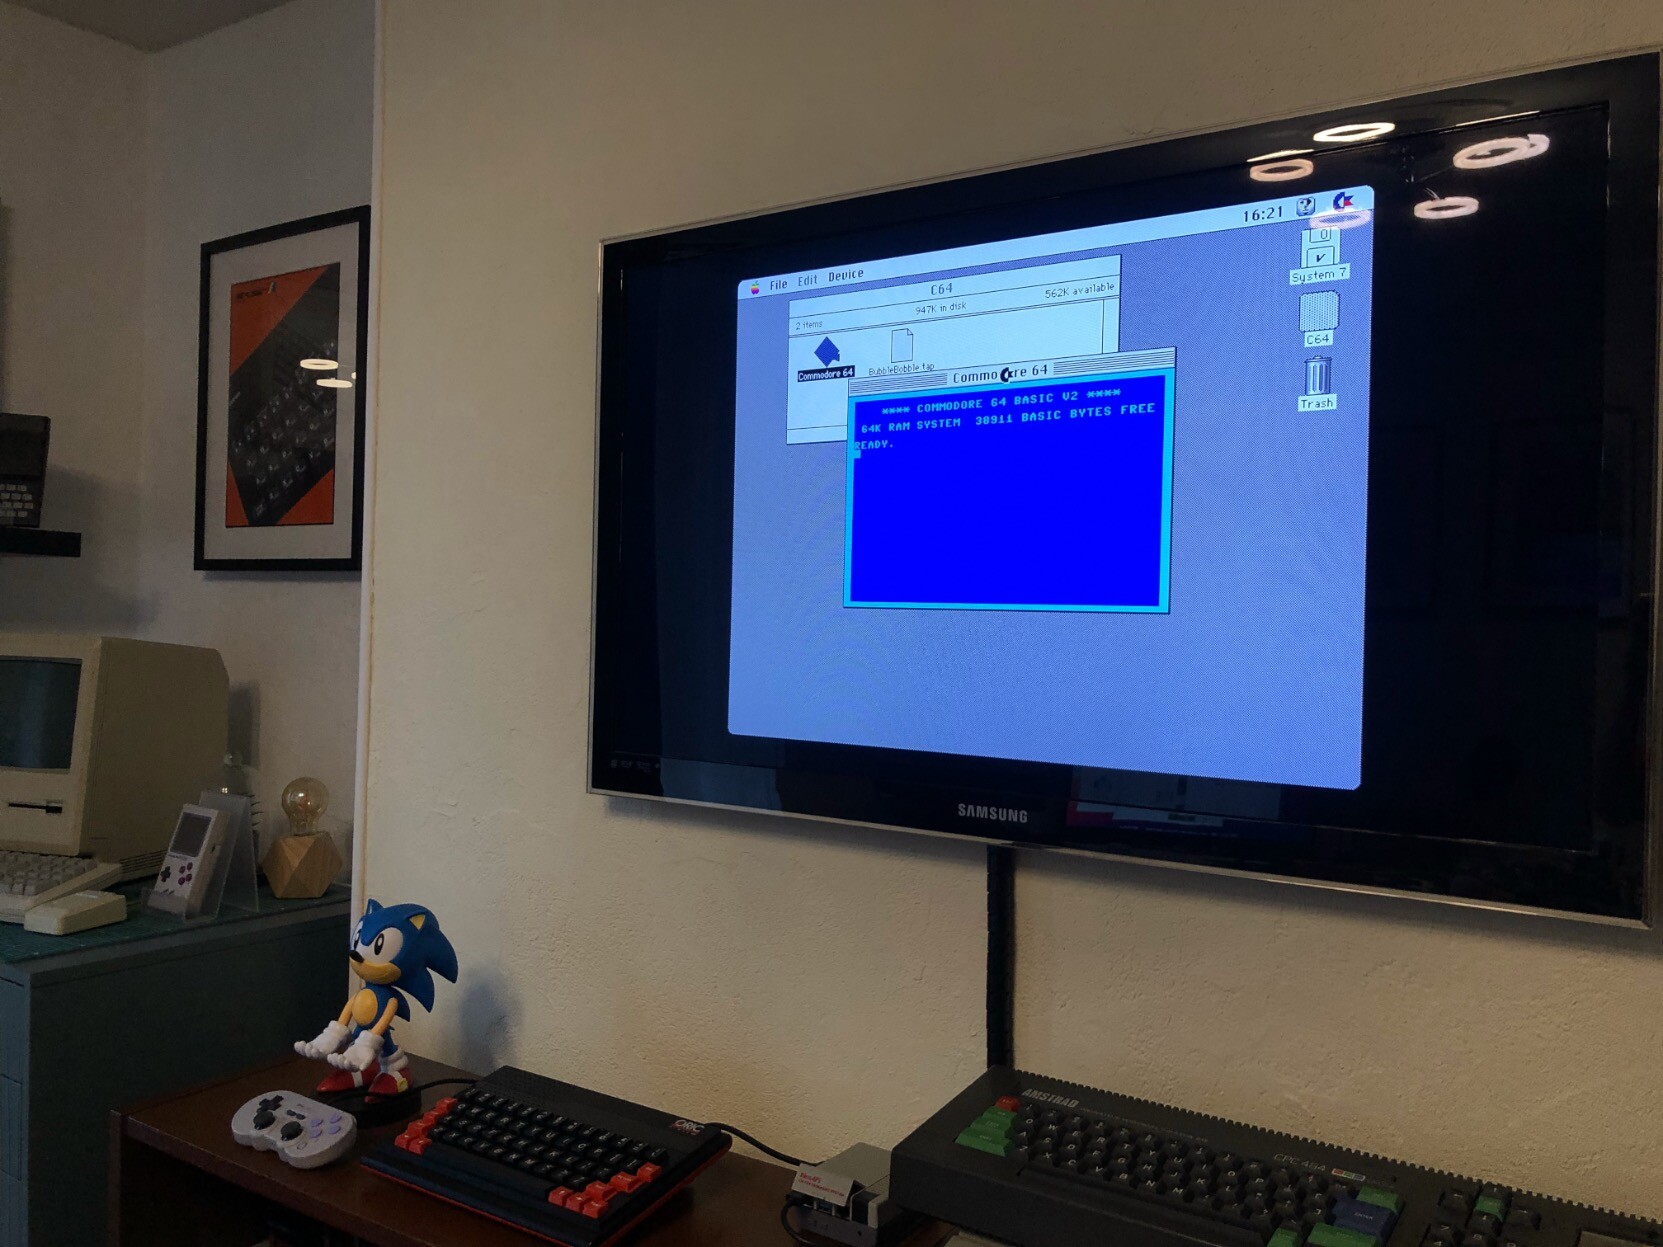 Hou op Anoi Reageren Fred Bellaiche: "Running a Commodore 64 emulato…" - Fosstodon